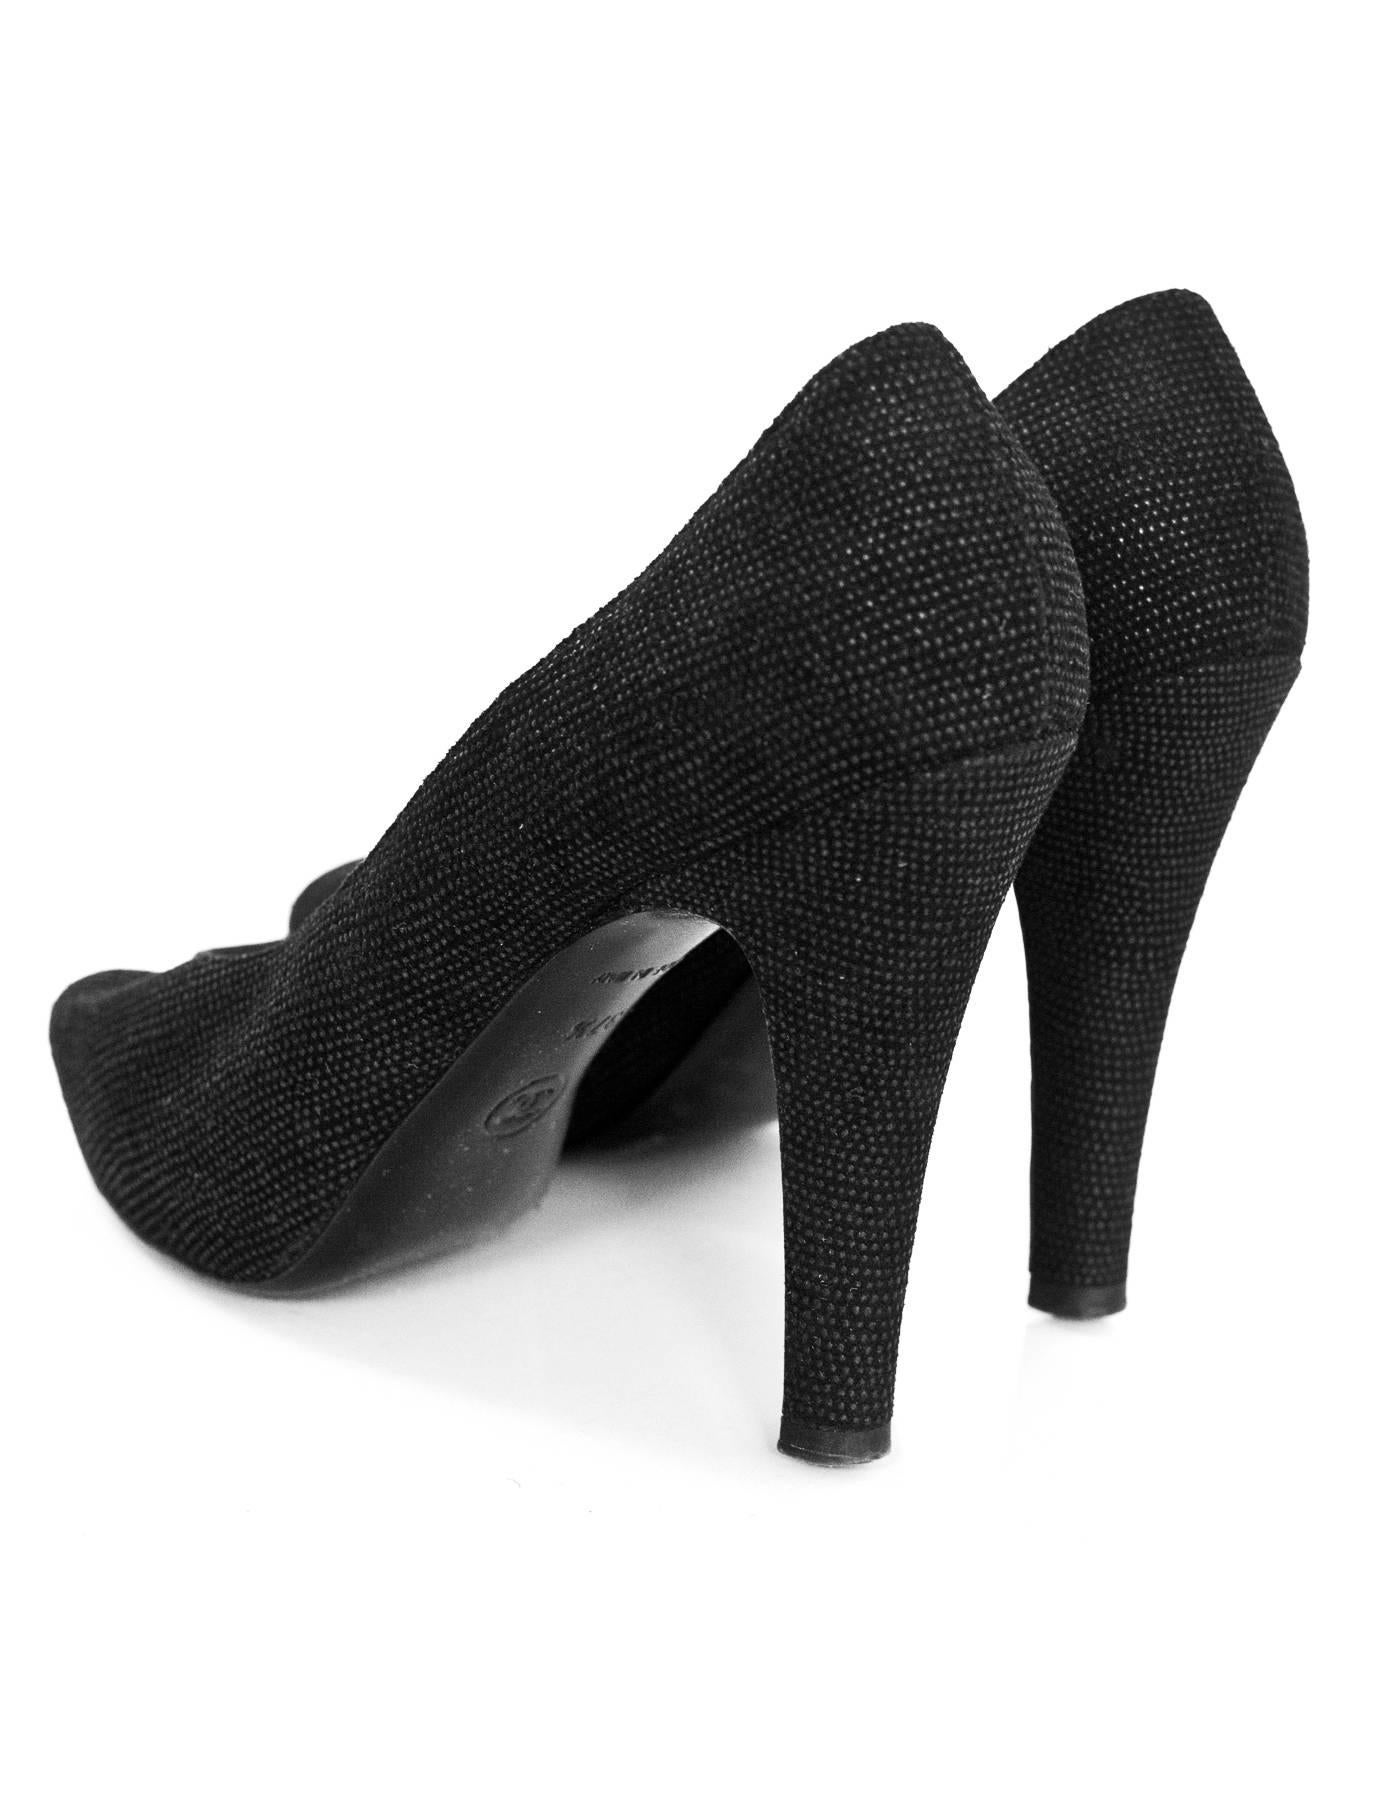 Women's Chanel Black Textured Peep-Toe Pumps Sz 37.5